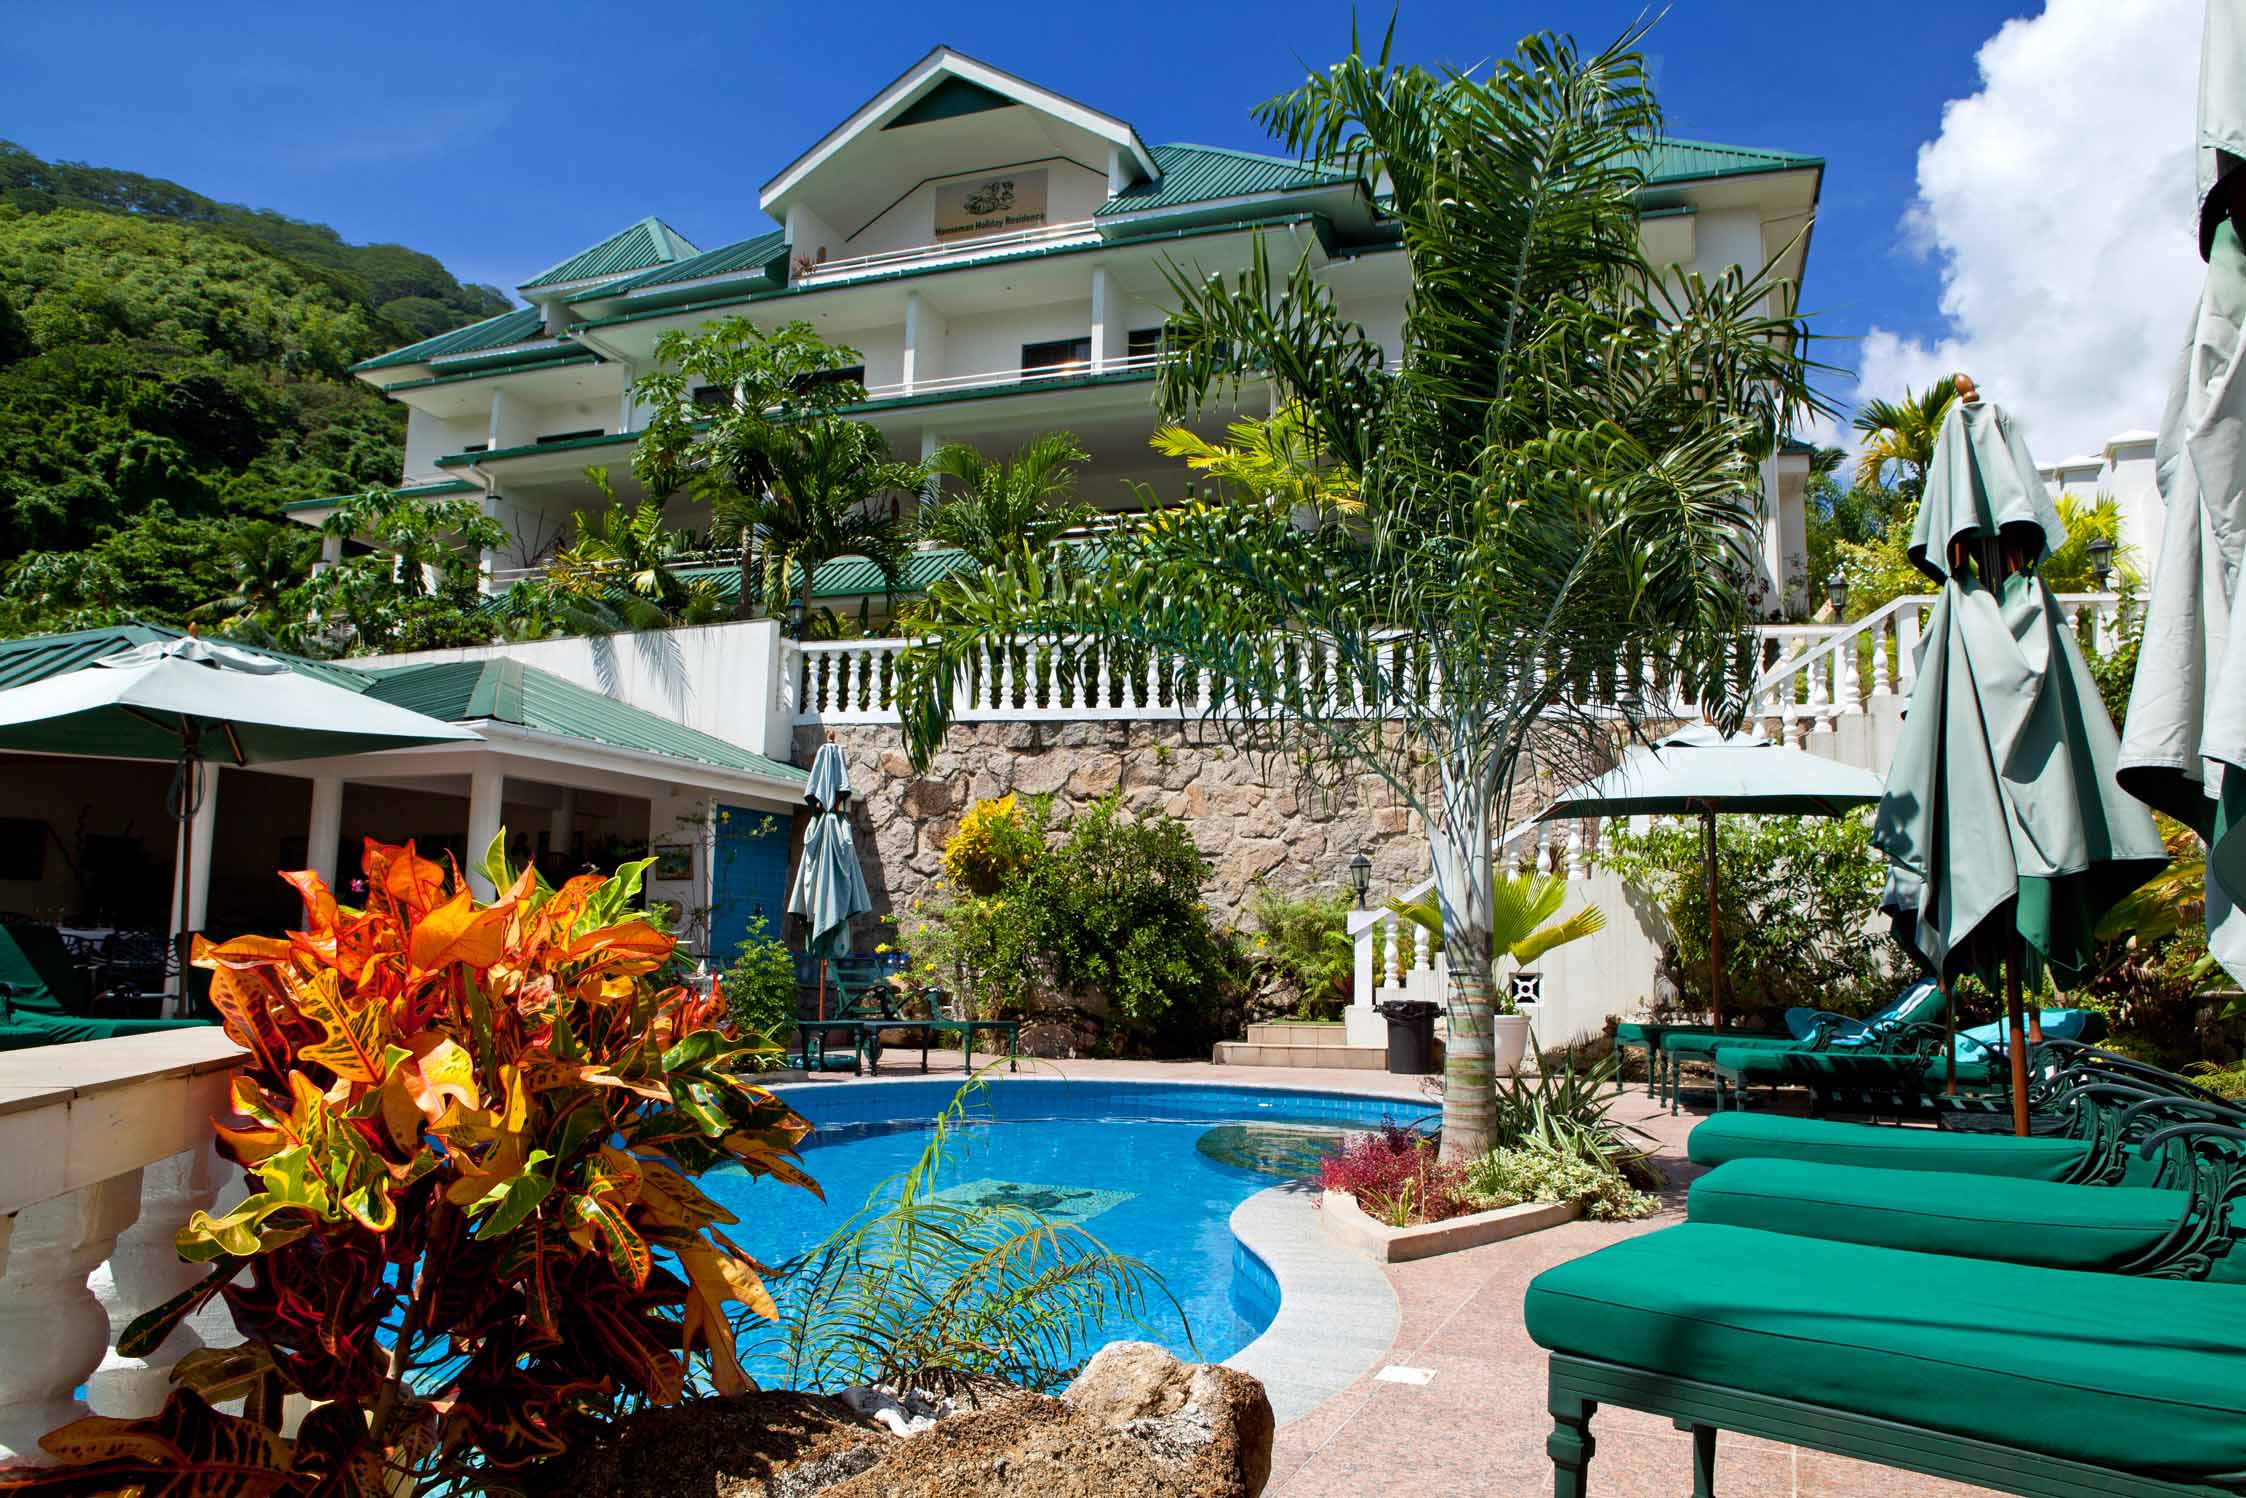 Hanneman Holiday Residence - Beau Vallon - Seychelles